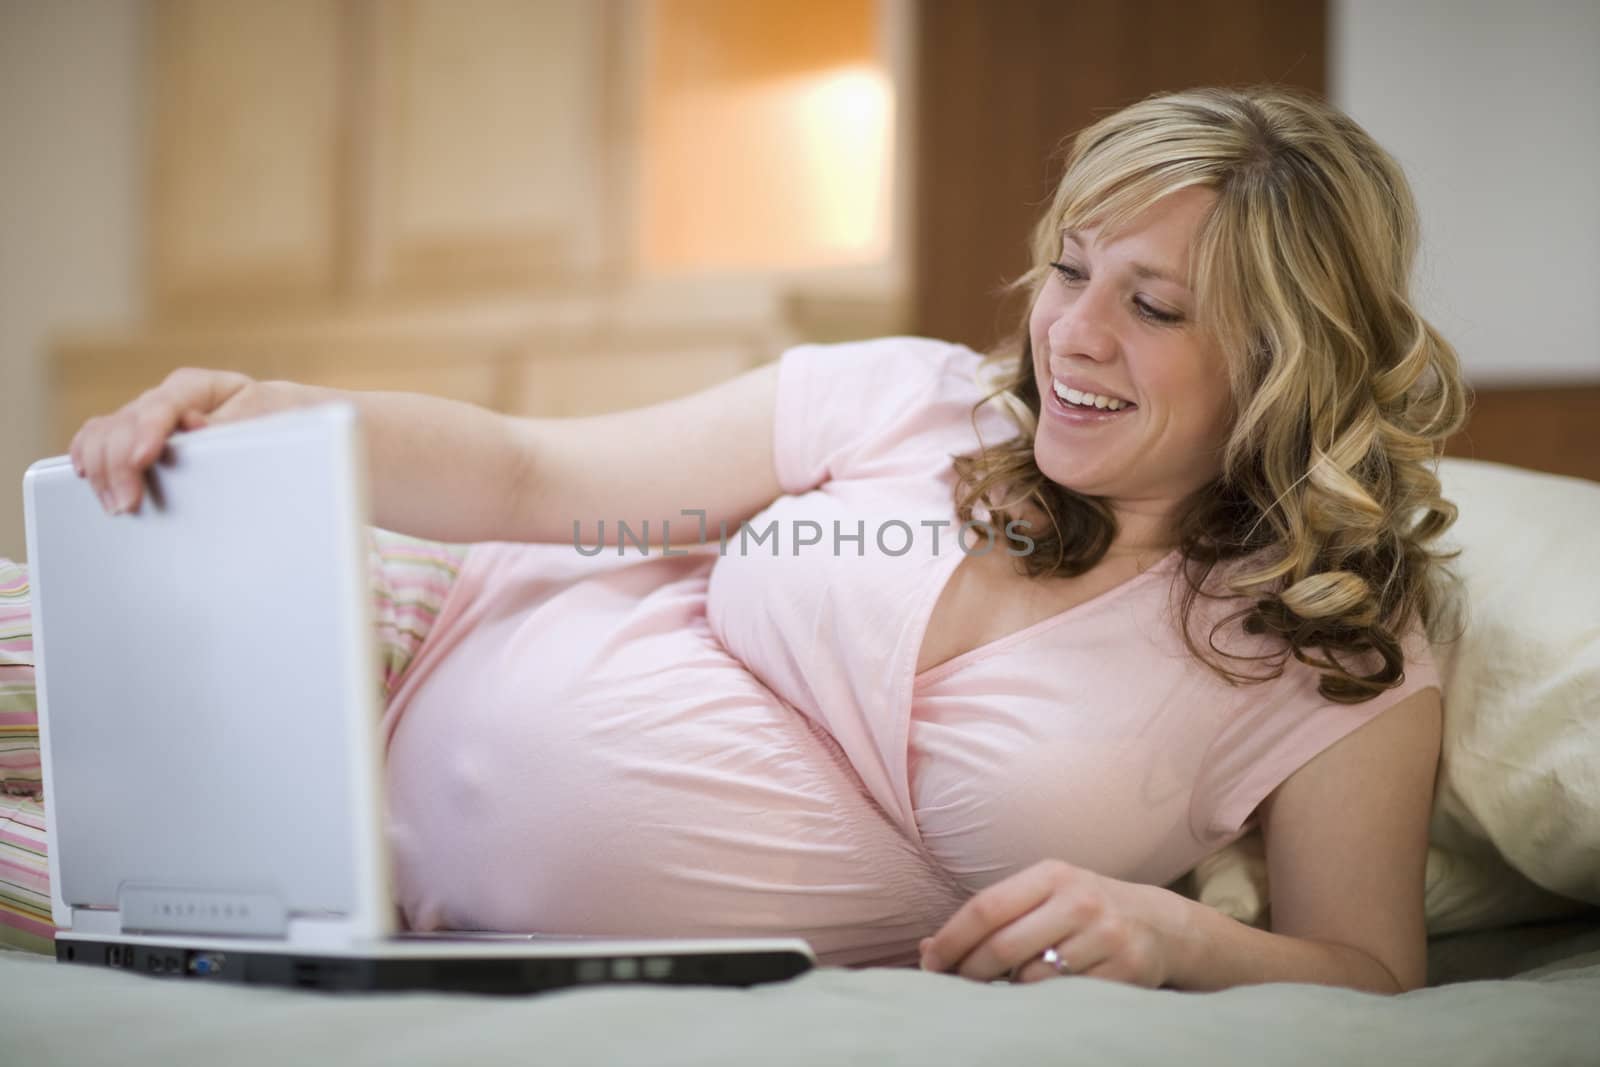 Pregnant woman using laptop by edbockstock